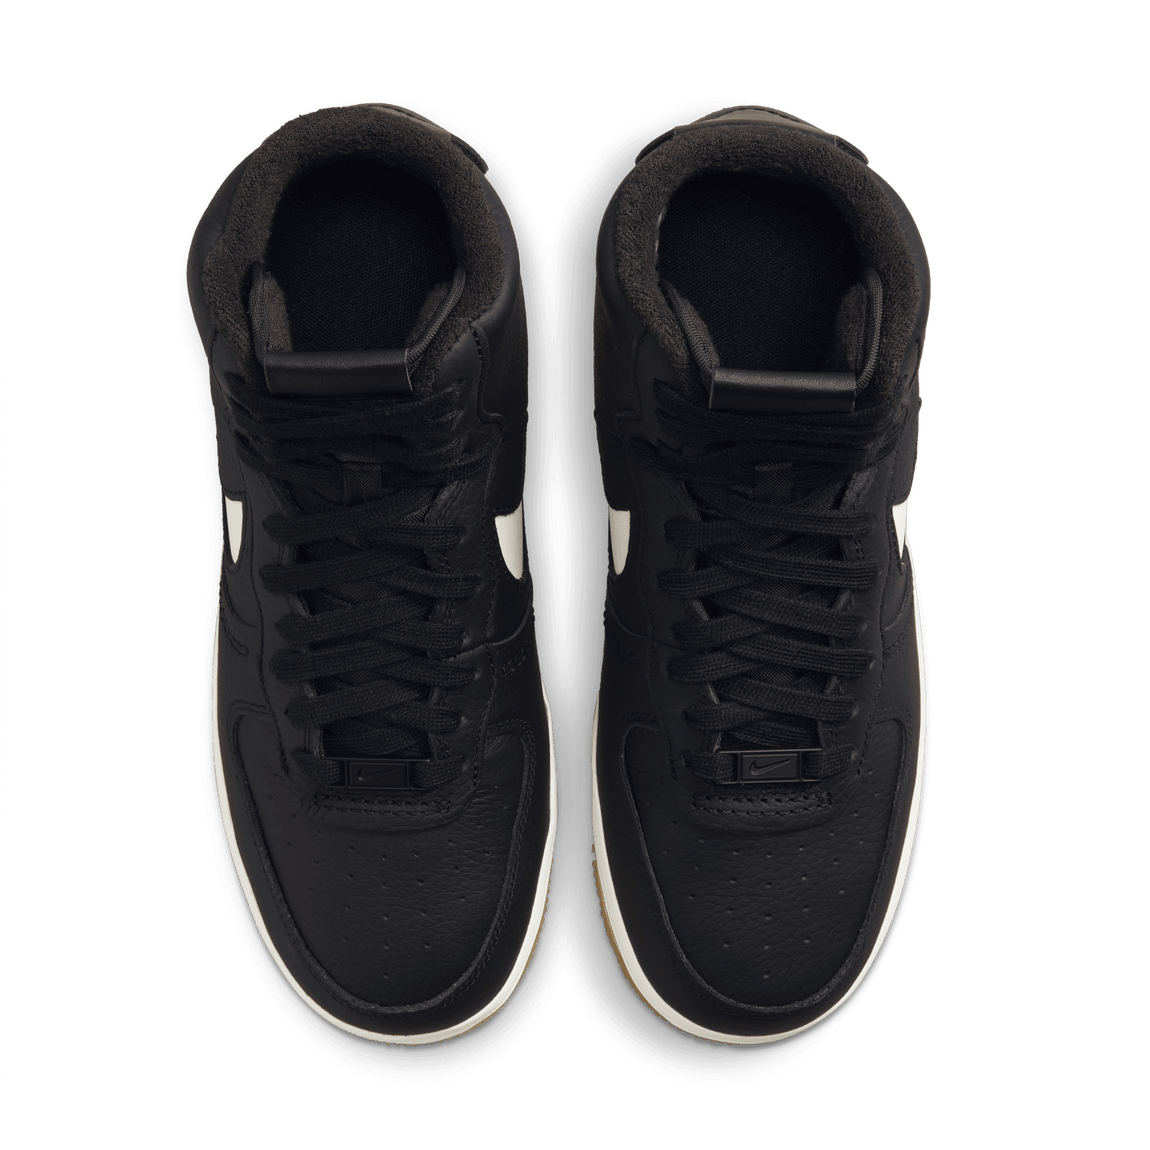 NIke Air Force 1 Utility 'Black & Gum Medium Brown' Release Date. Nike SNKRS